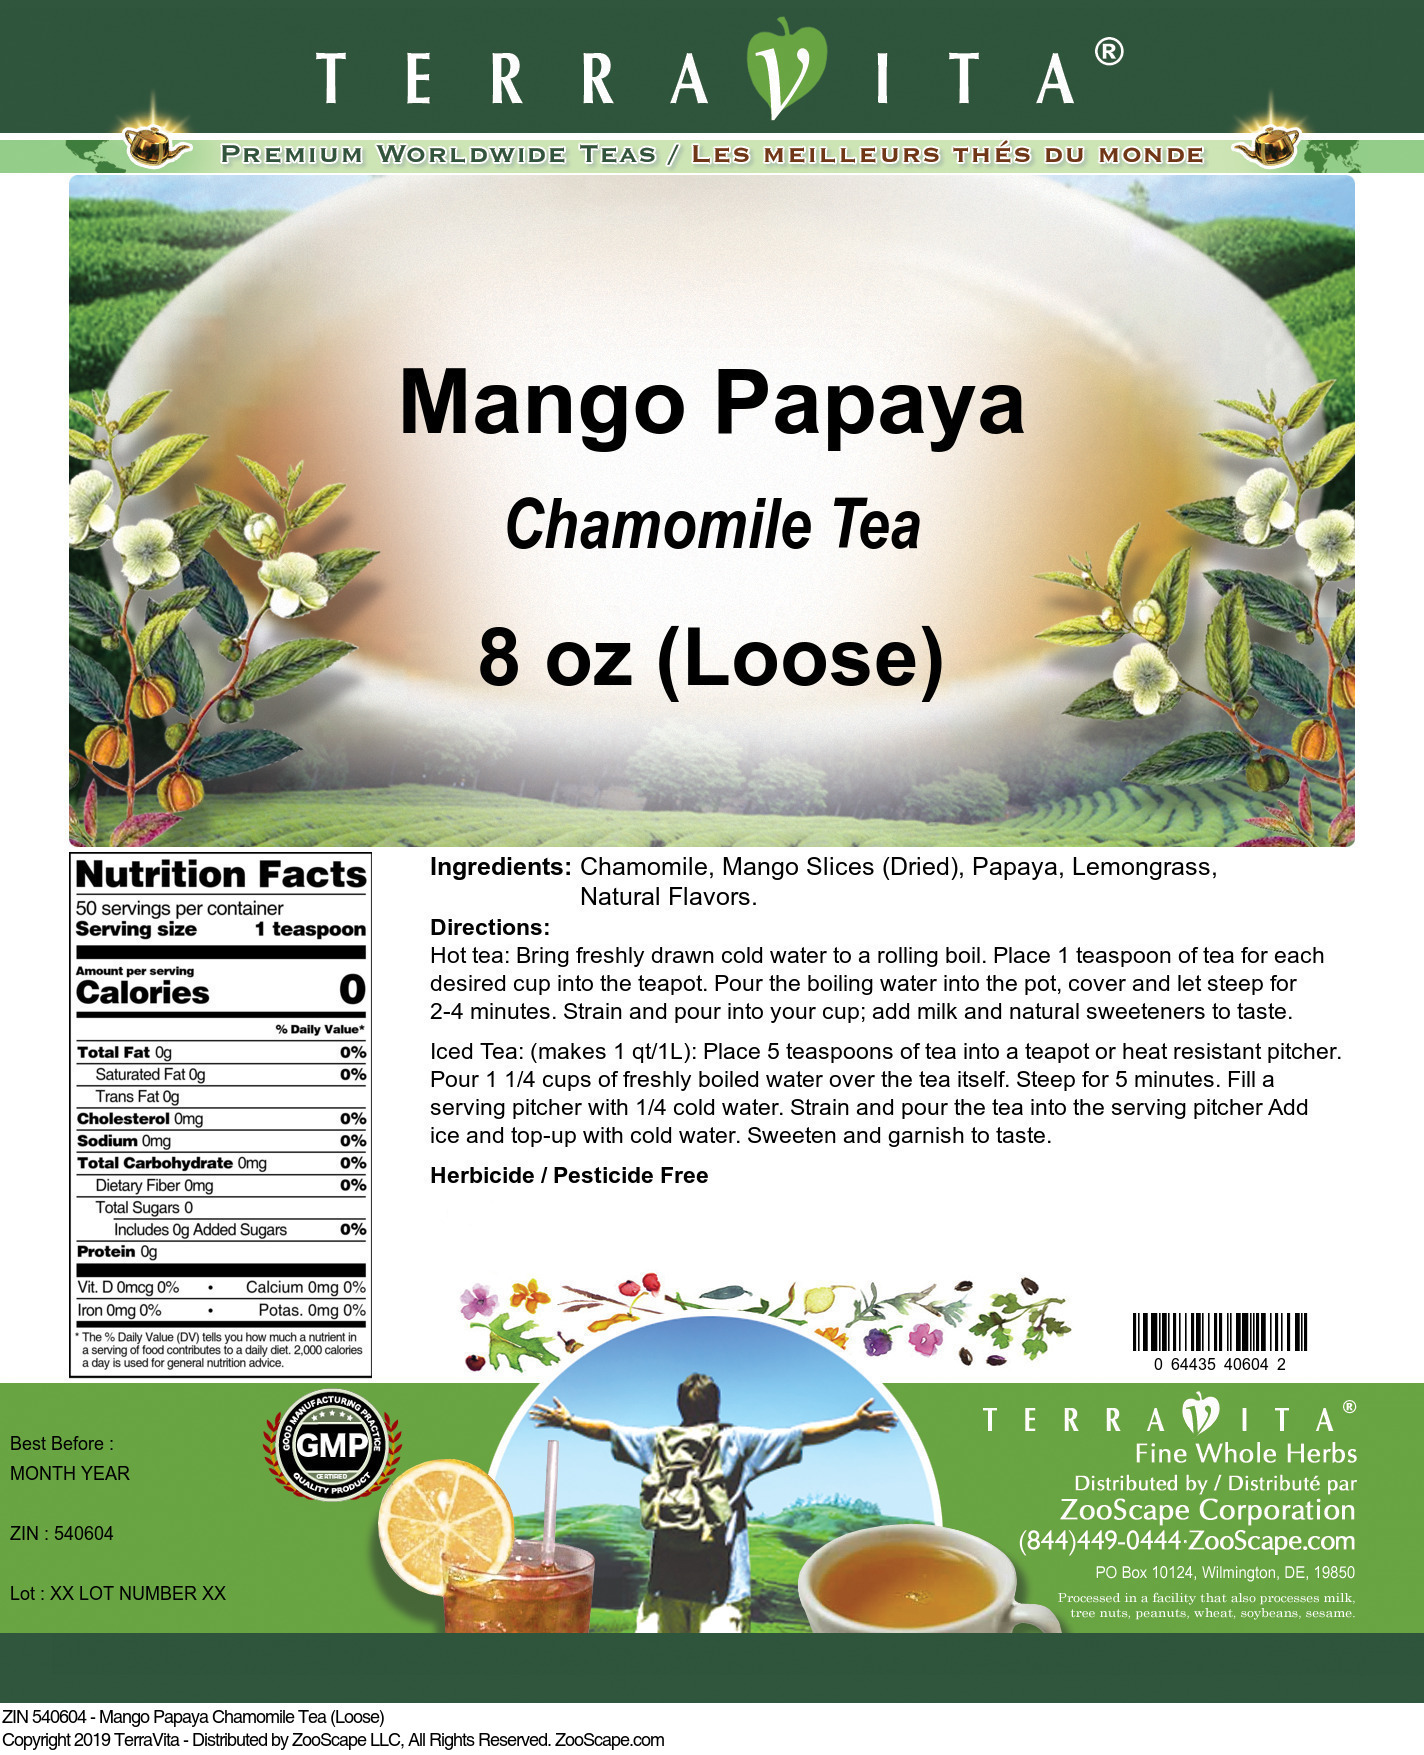 Mango Papaya Chamomile Tea (Loose) - Label